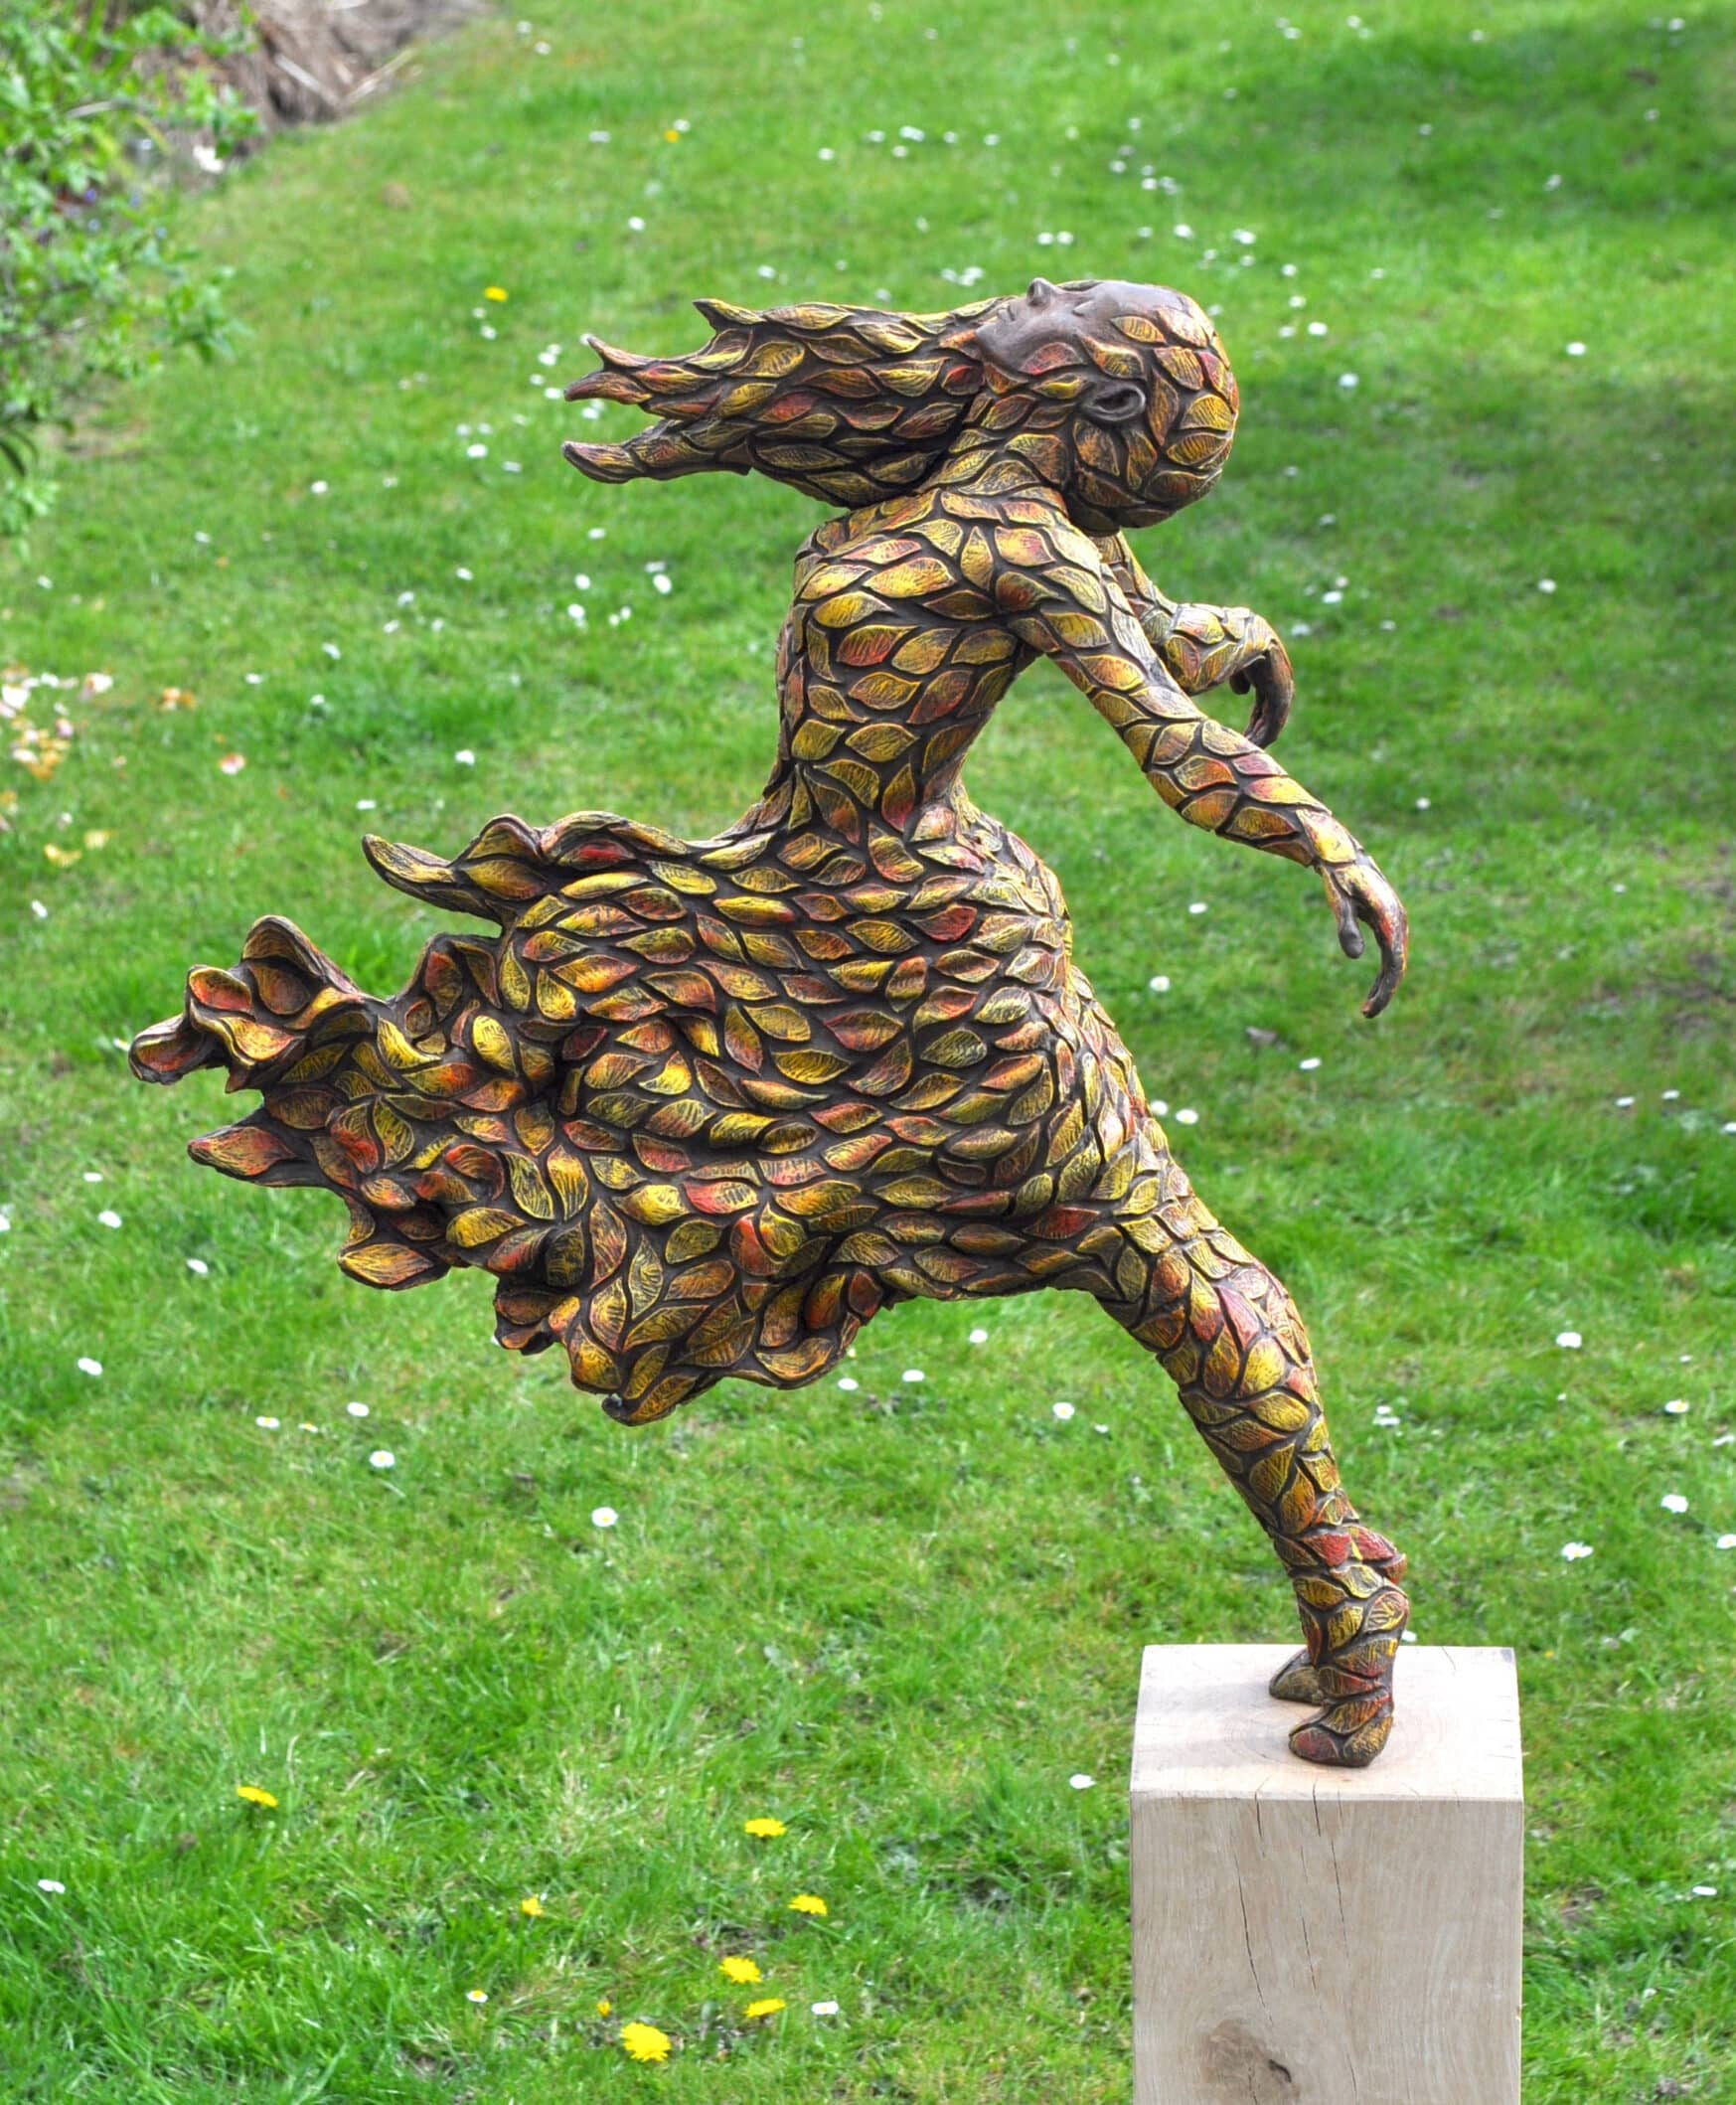 Jonathan Hateley esculturas de bronce